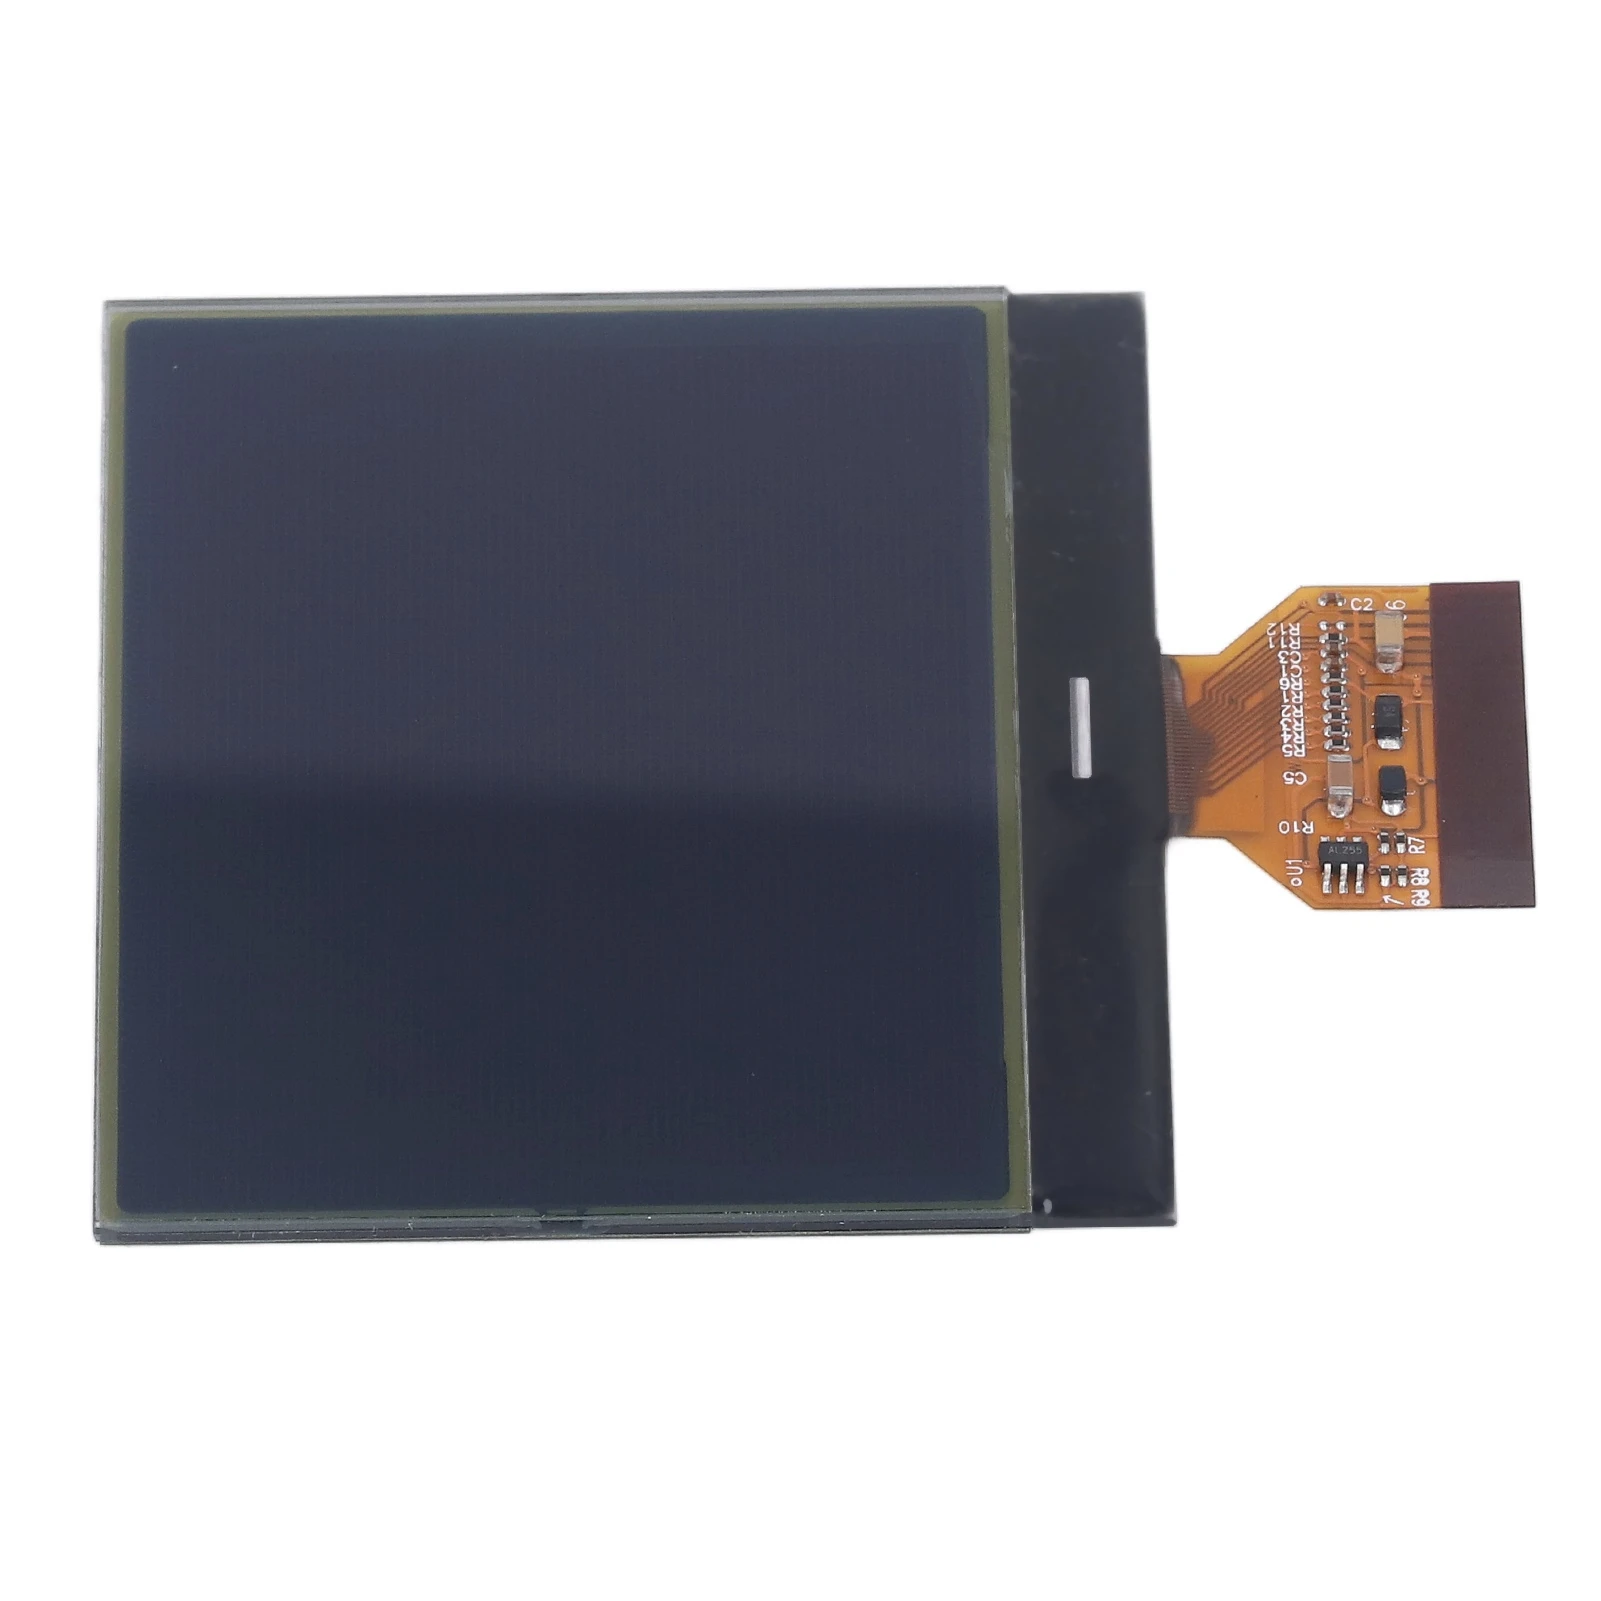 Panel de instrumentos LCD de Cristal FPC Conexión Velocímetro de Pantalla para el Coche . ' - ' . 1